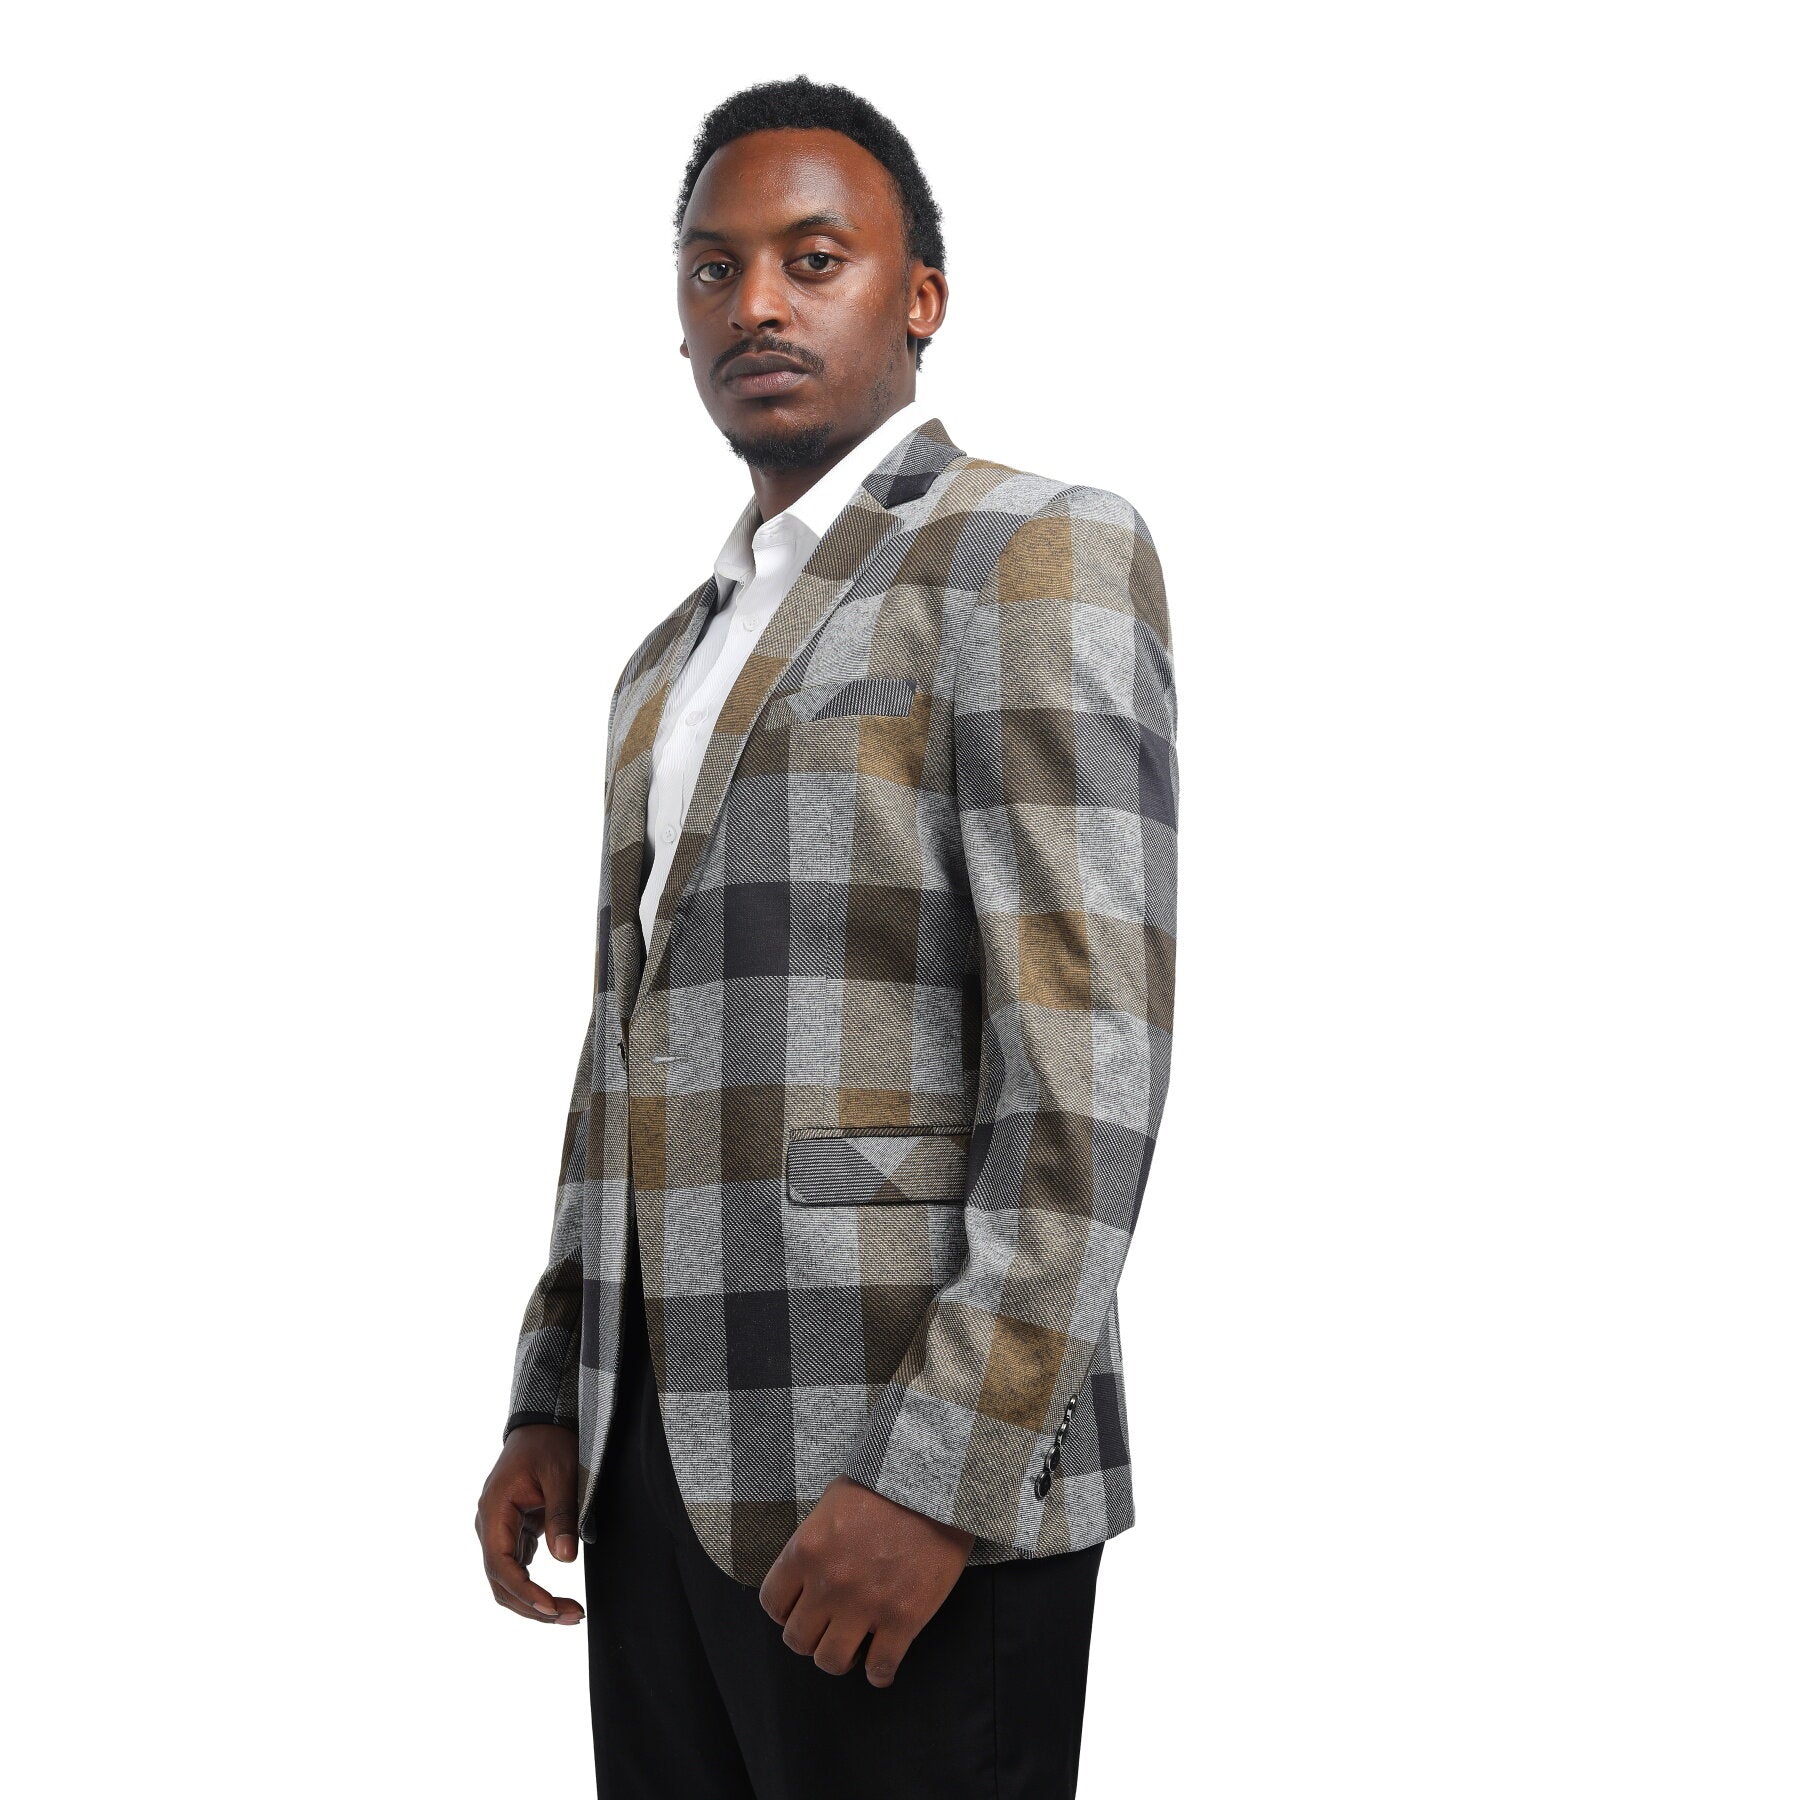 Plaid Stripe Jacket Slim Fit Casual Blazer Coat